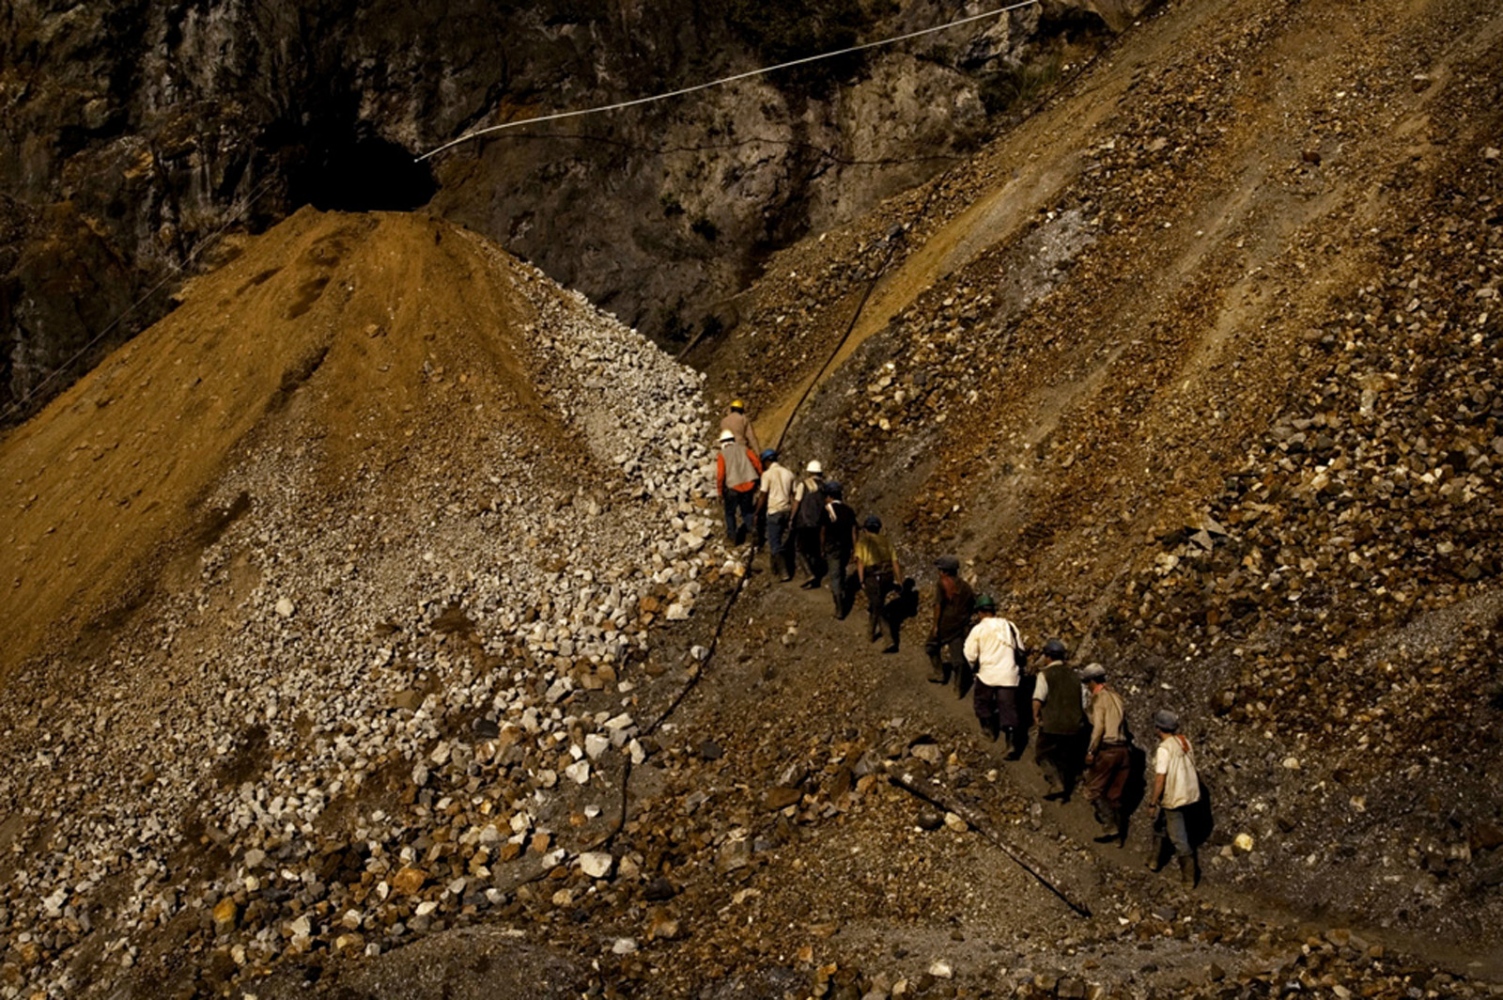 Flesh and Rocks  -  A mining day starts in the chivor mines. Chivor,...